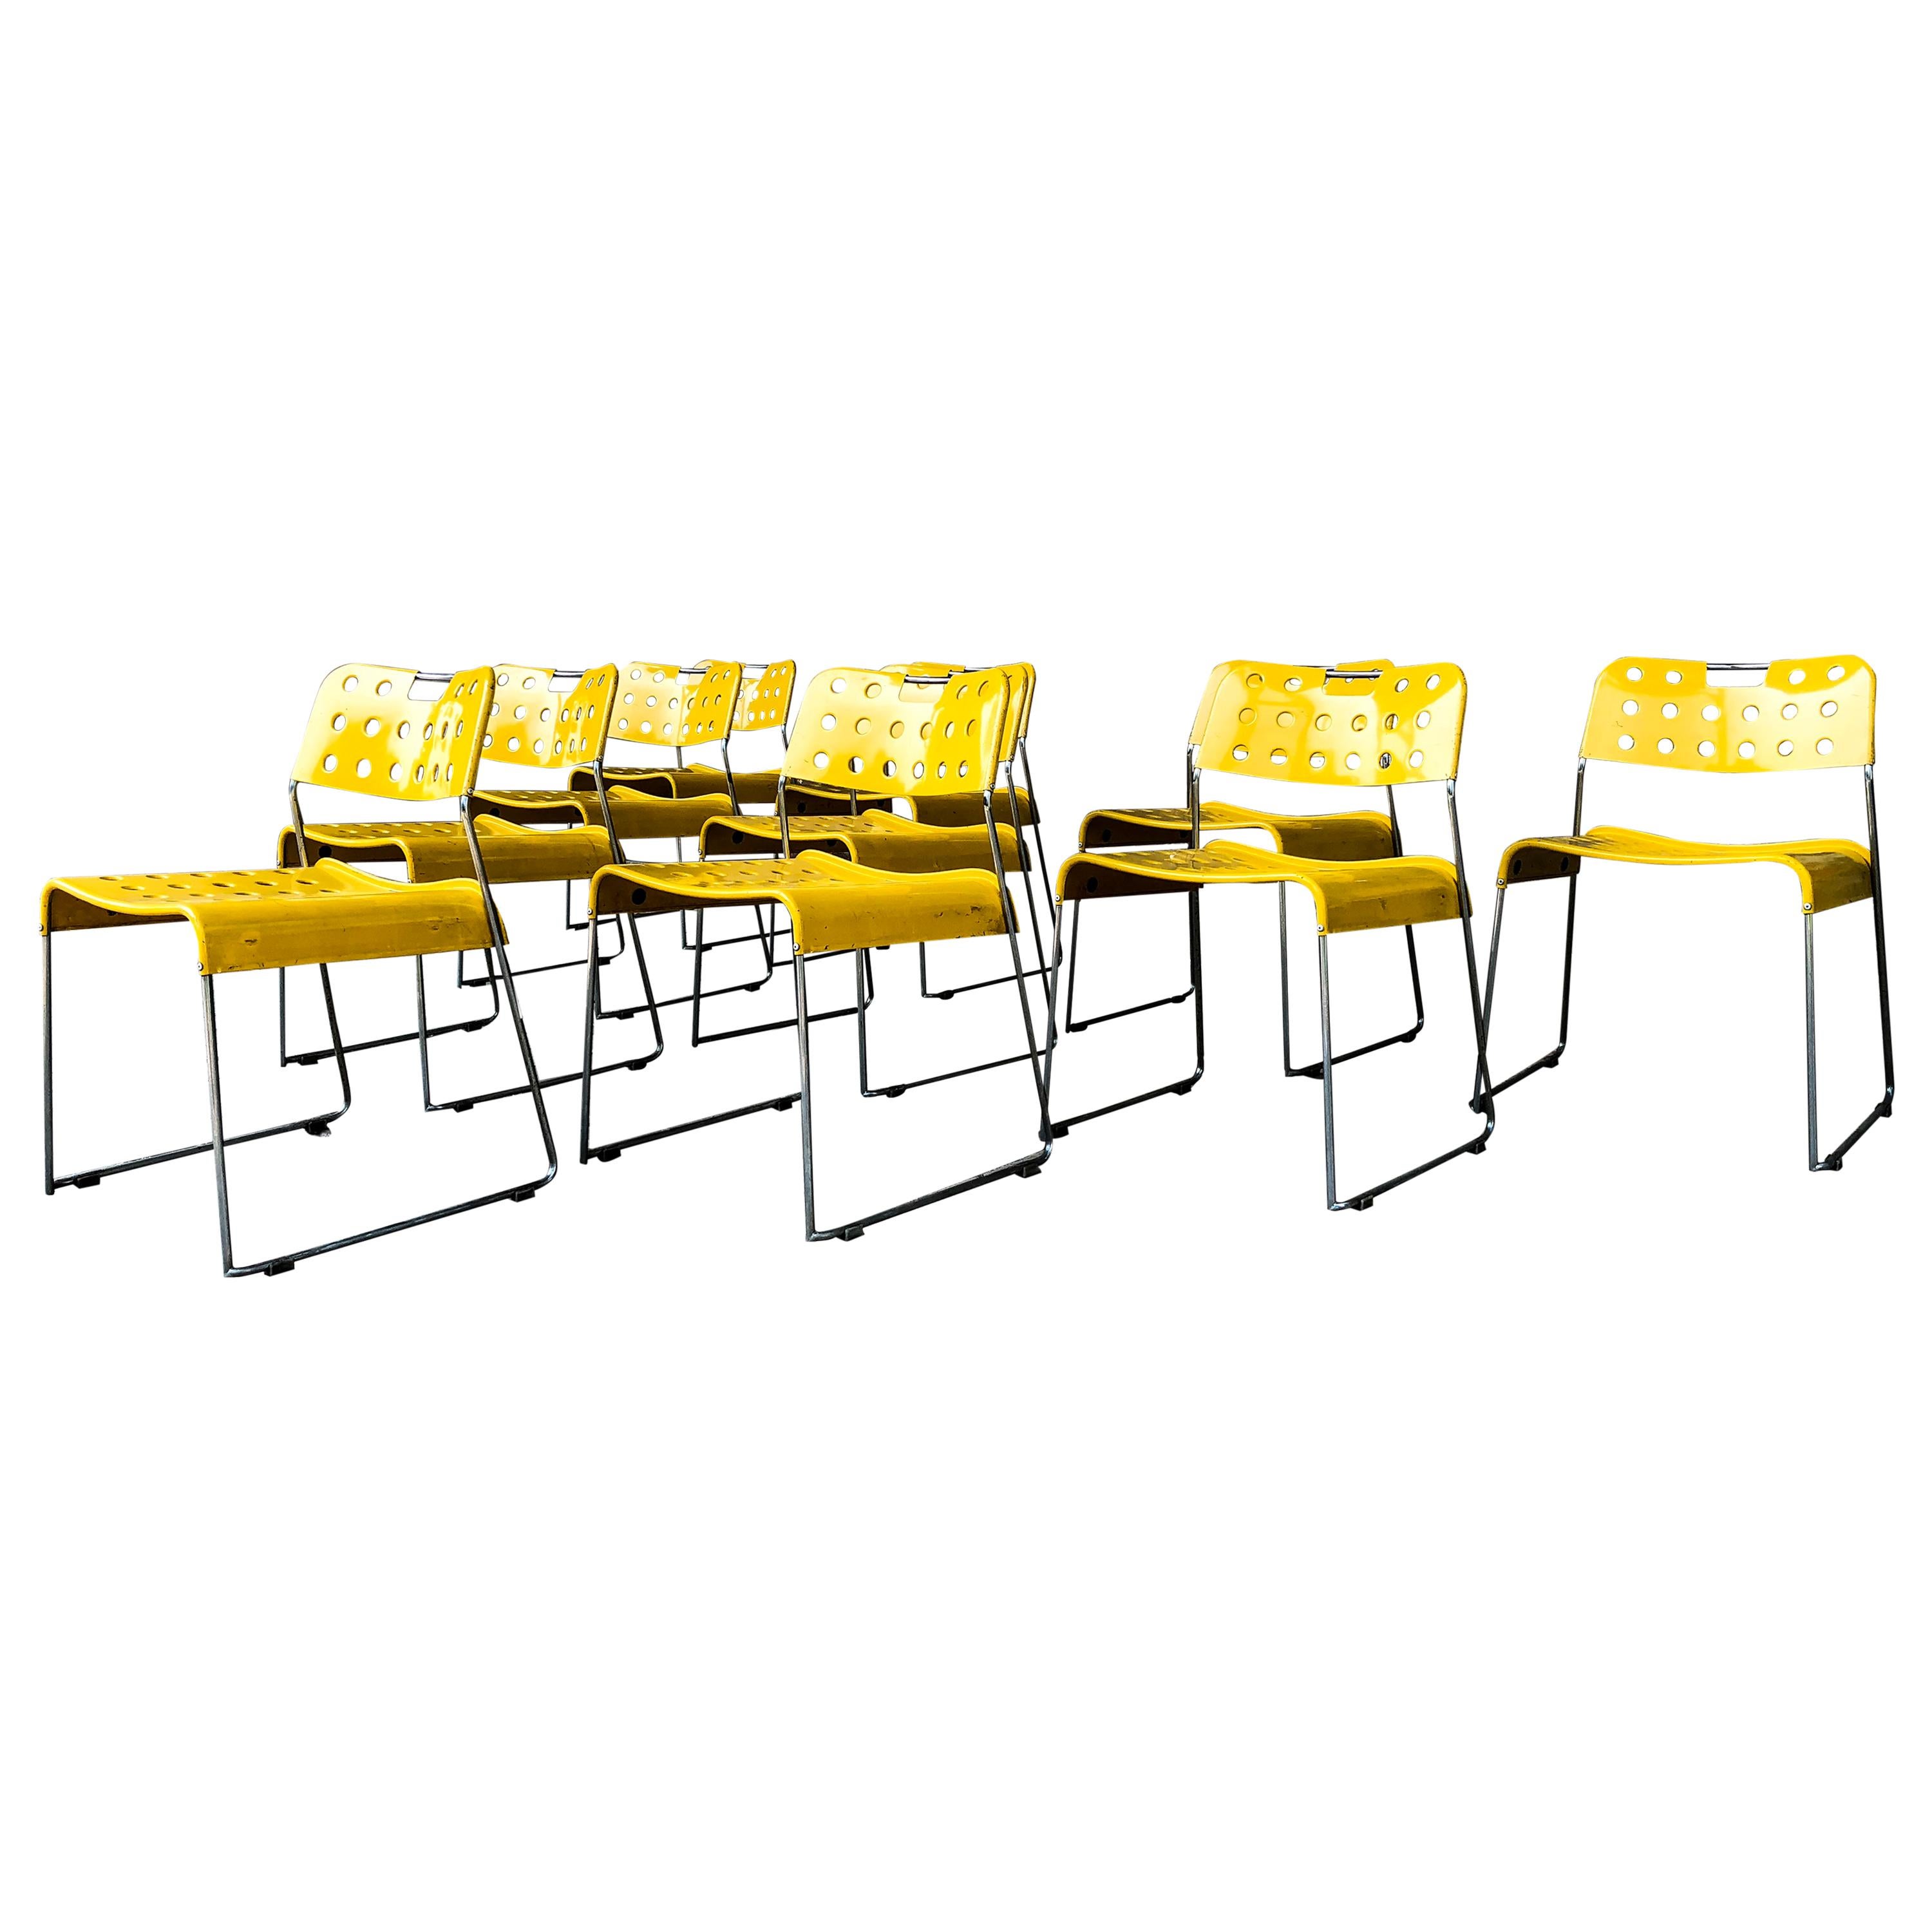 Italian Rodney Kinsman Space Age Yellow Omstak Chair for Bieffeplast, 1971, Set of 12 For Sale